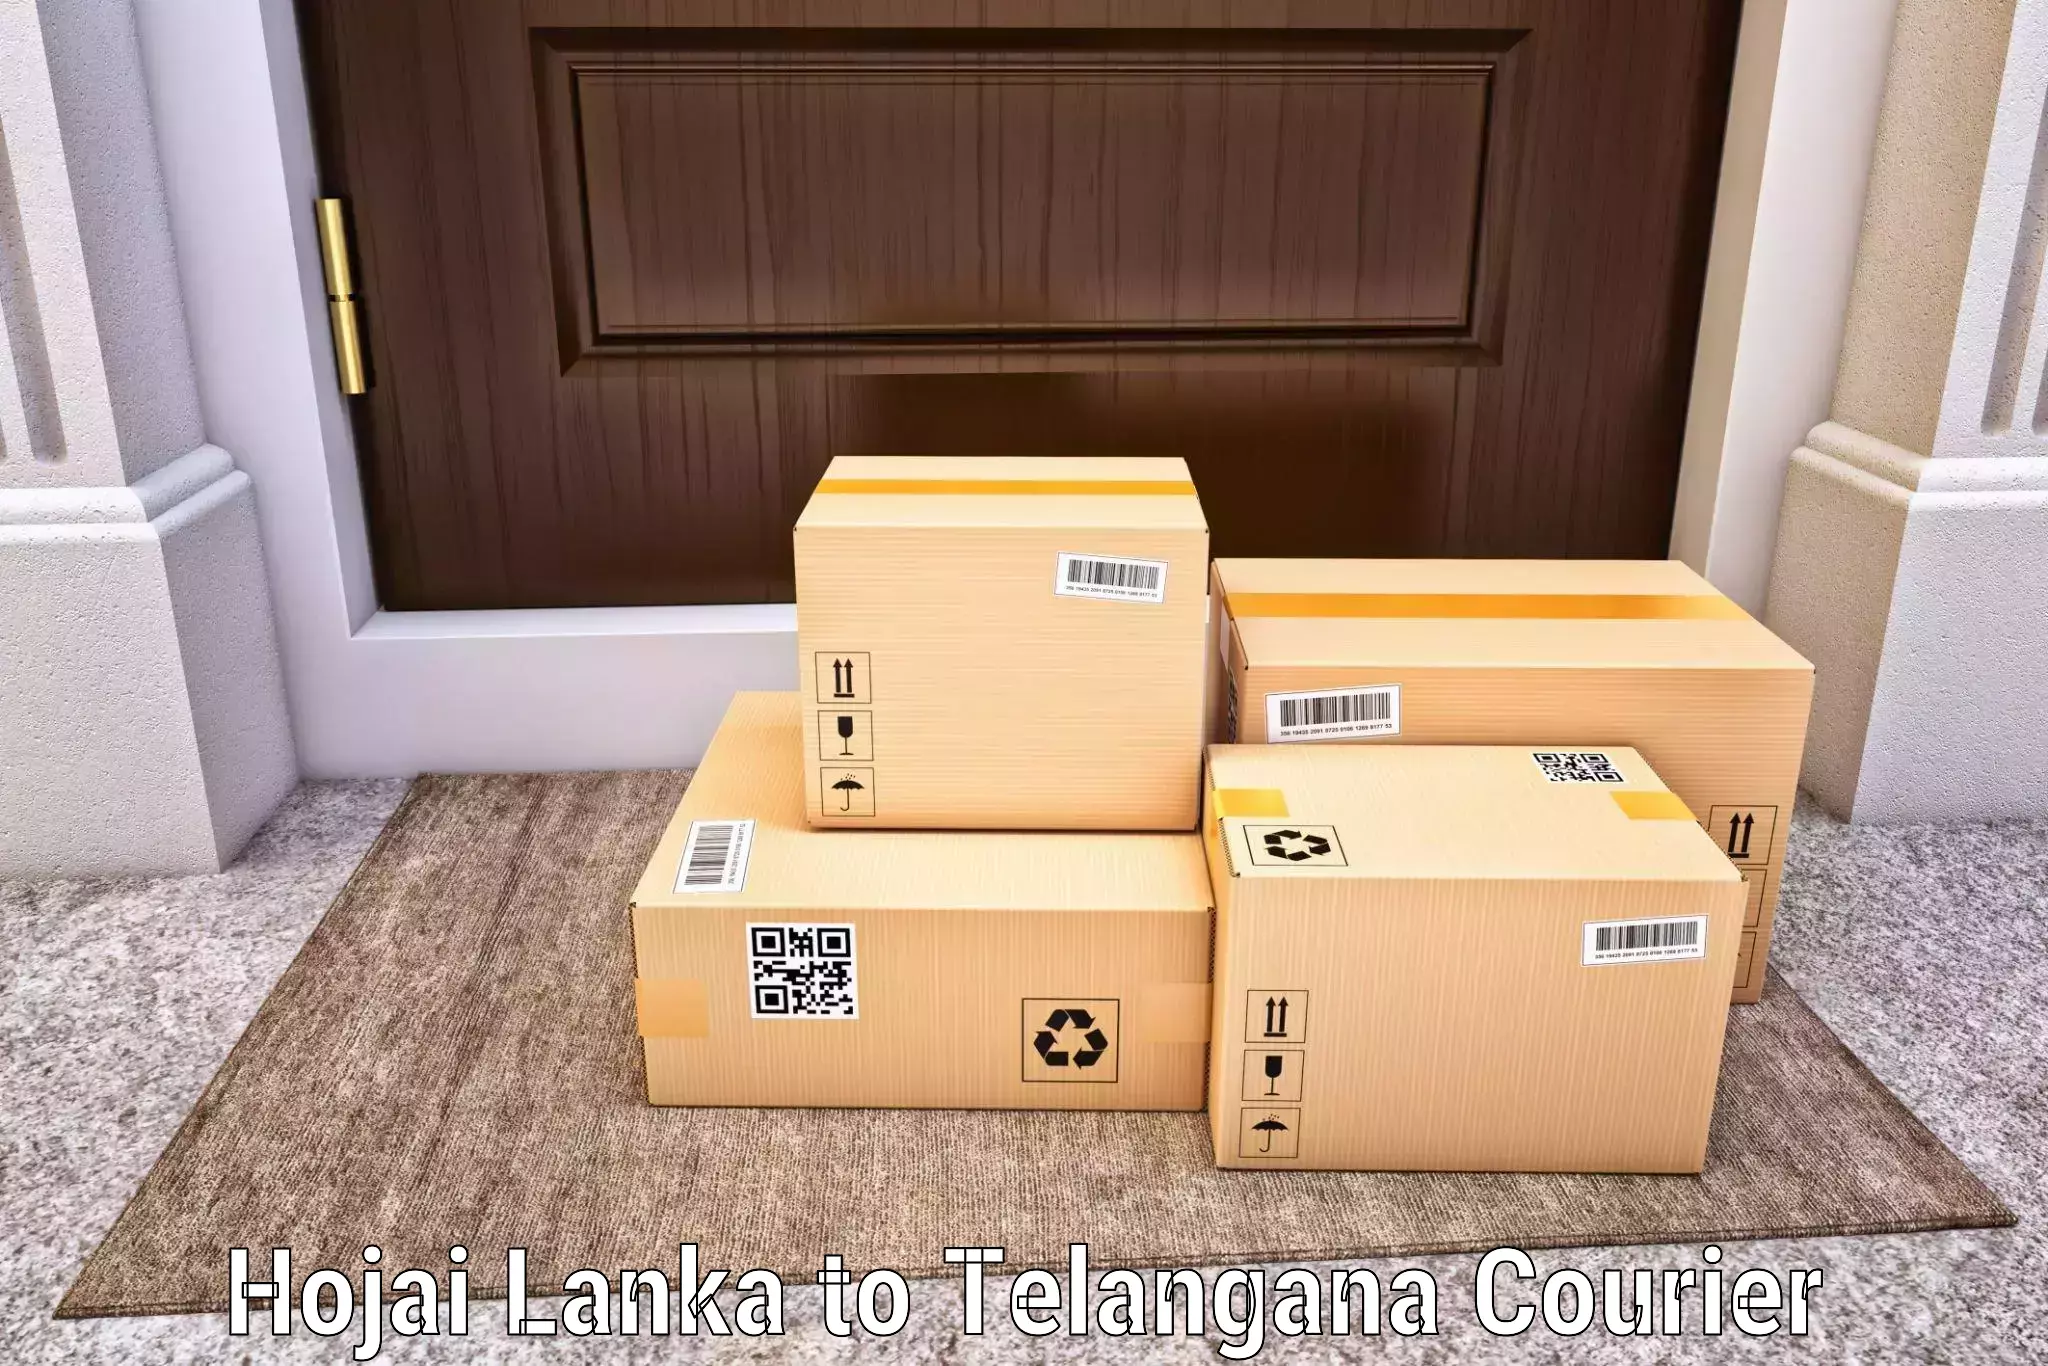 Courier service comparison Hojai Lanka to Raikal